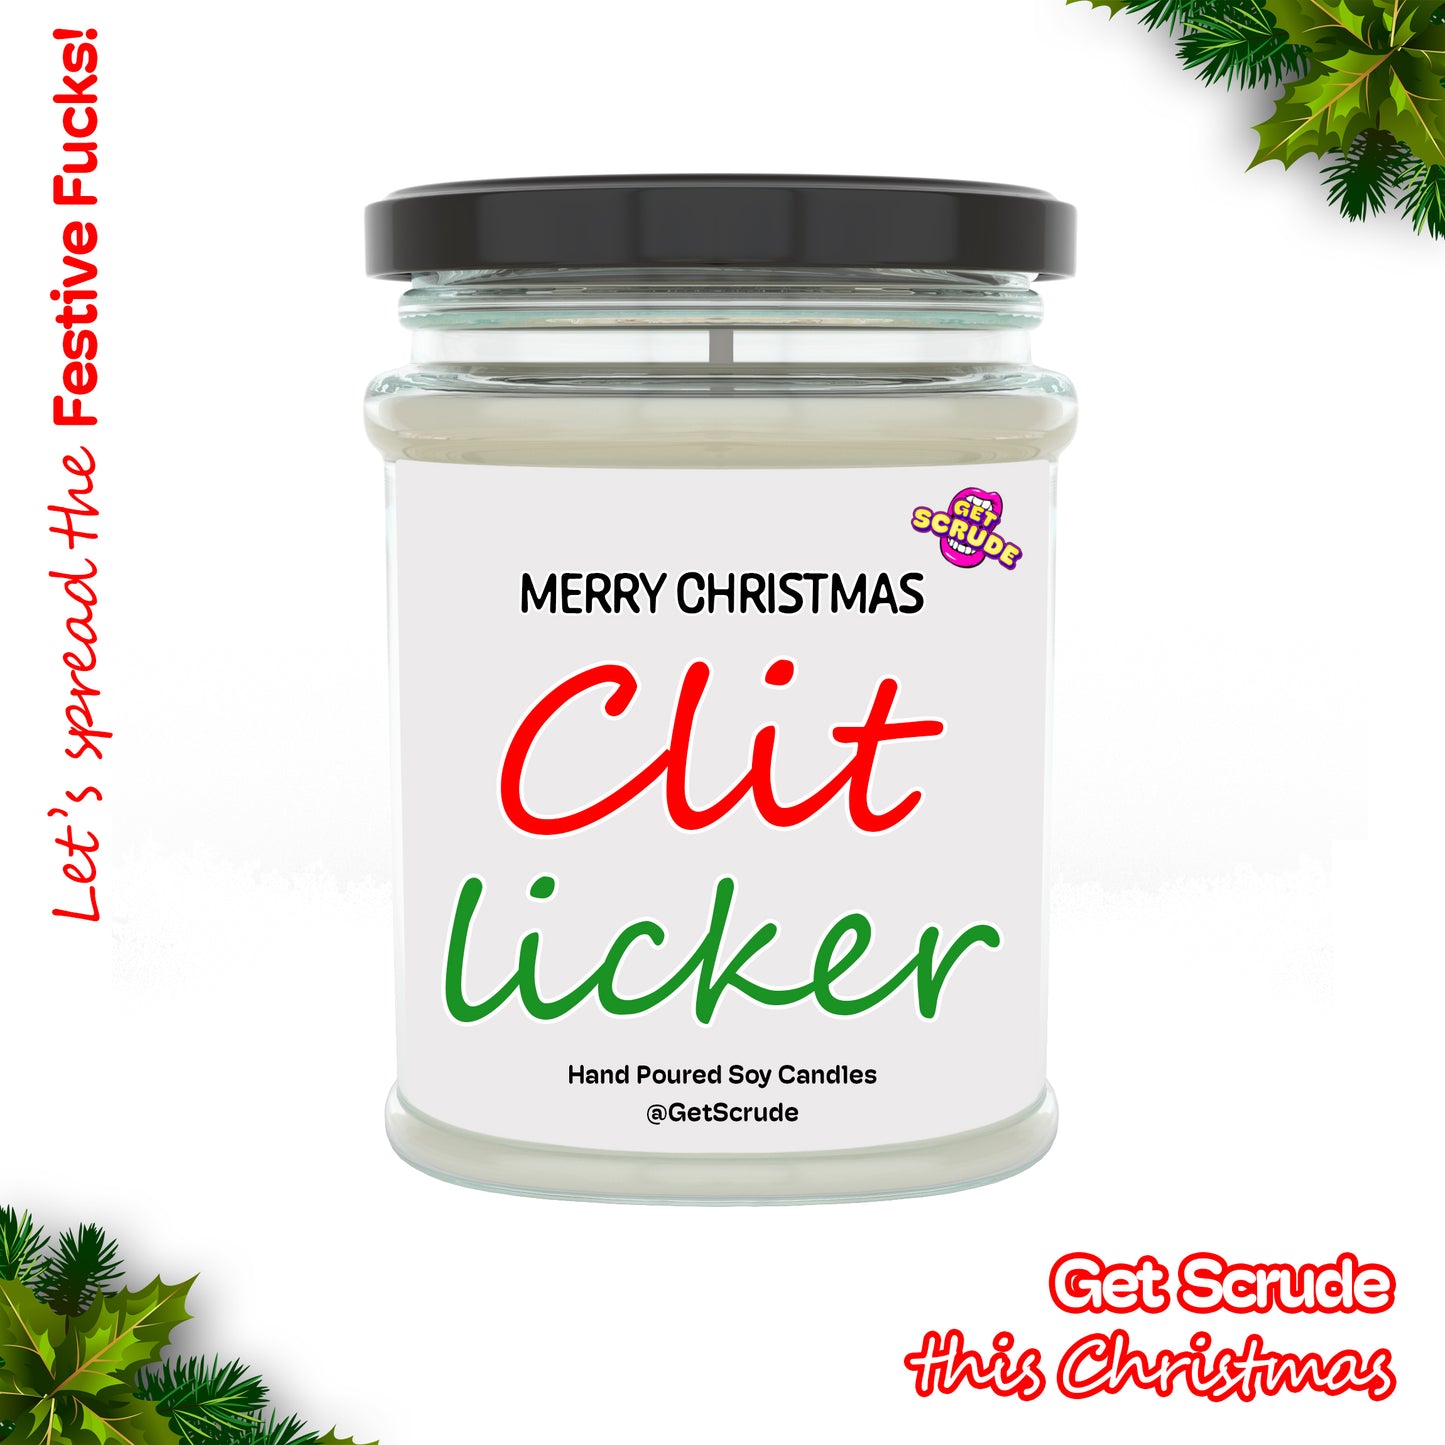 Merry Christmas Clit Licker